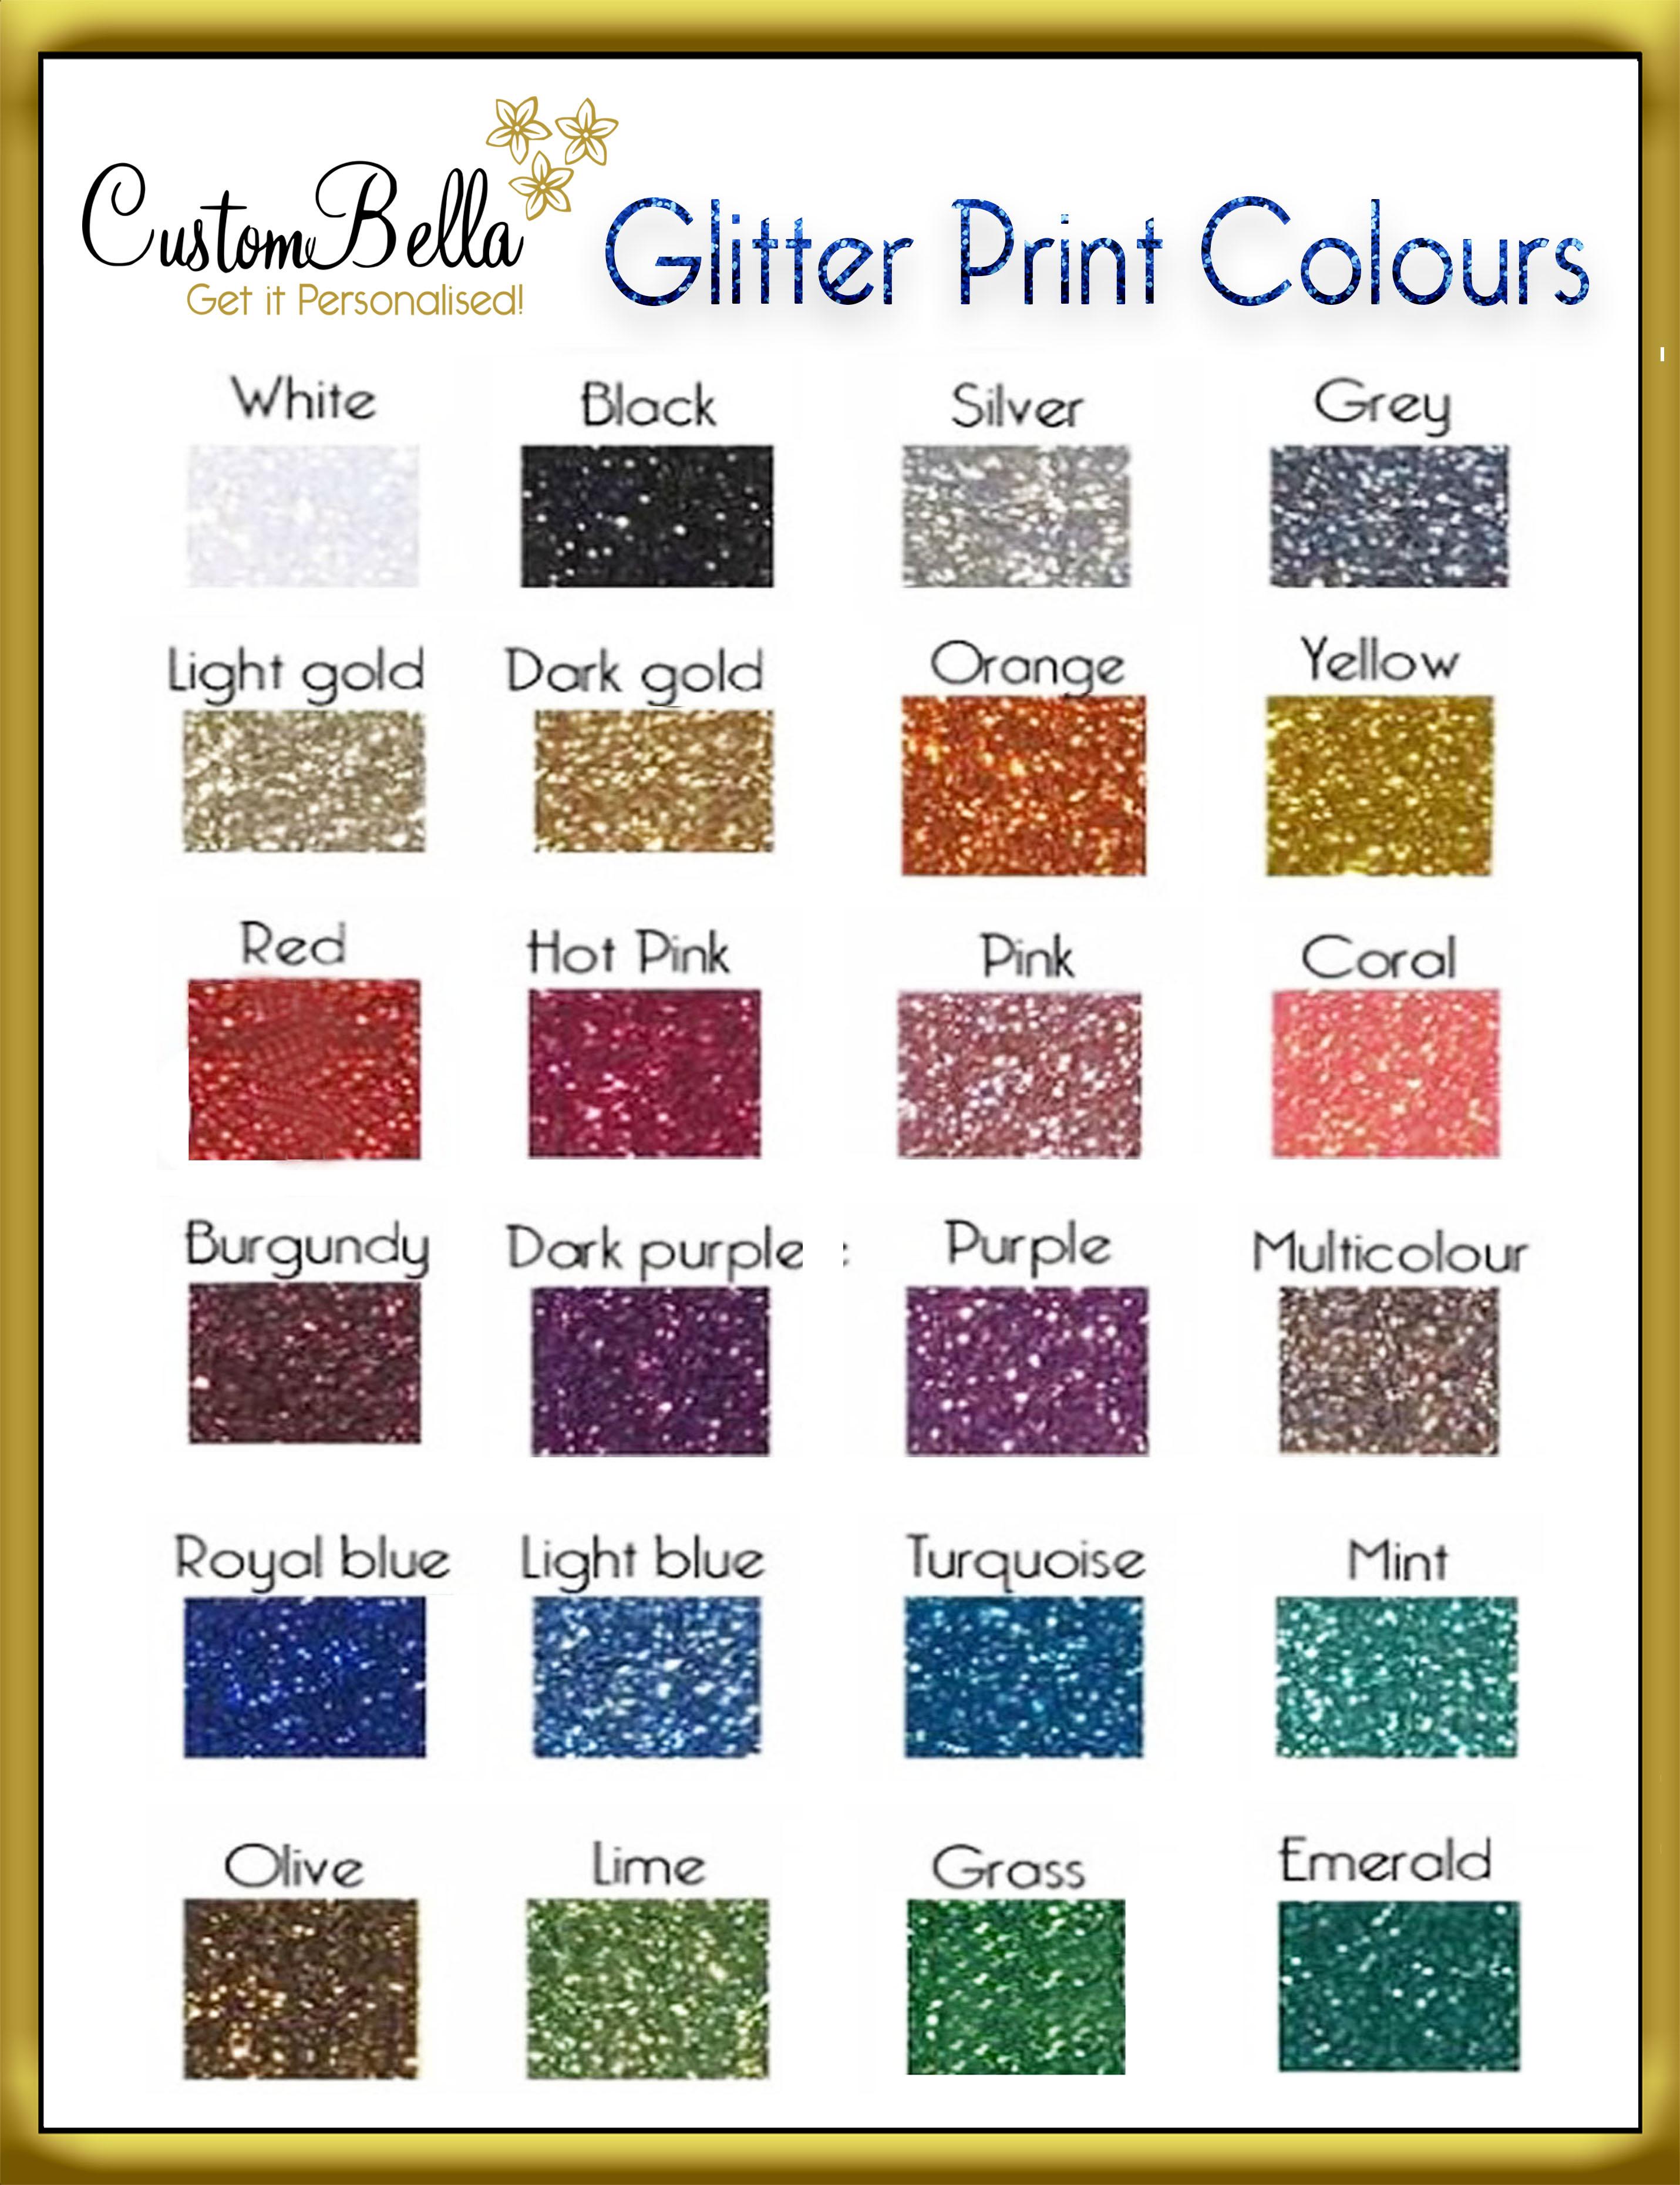 Custombella glitter print colours to select